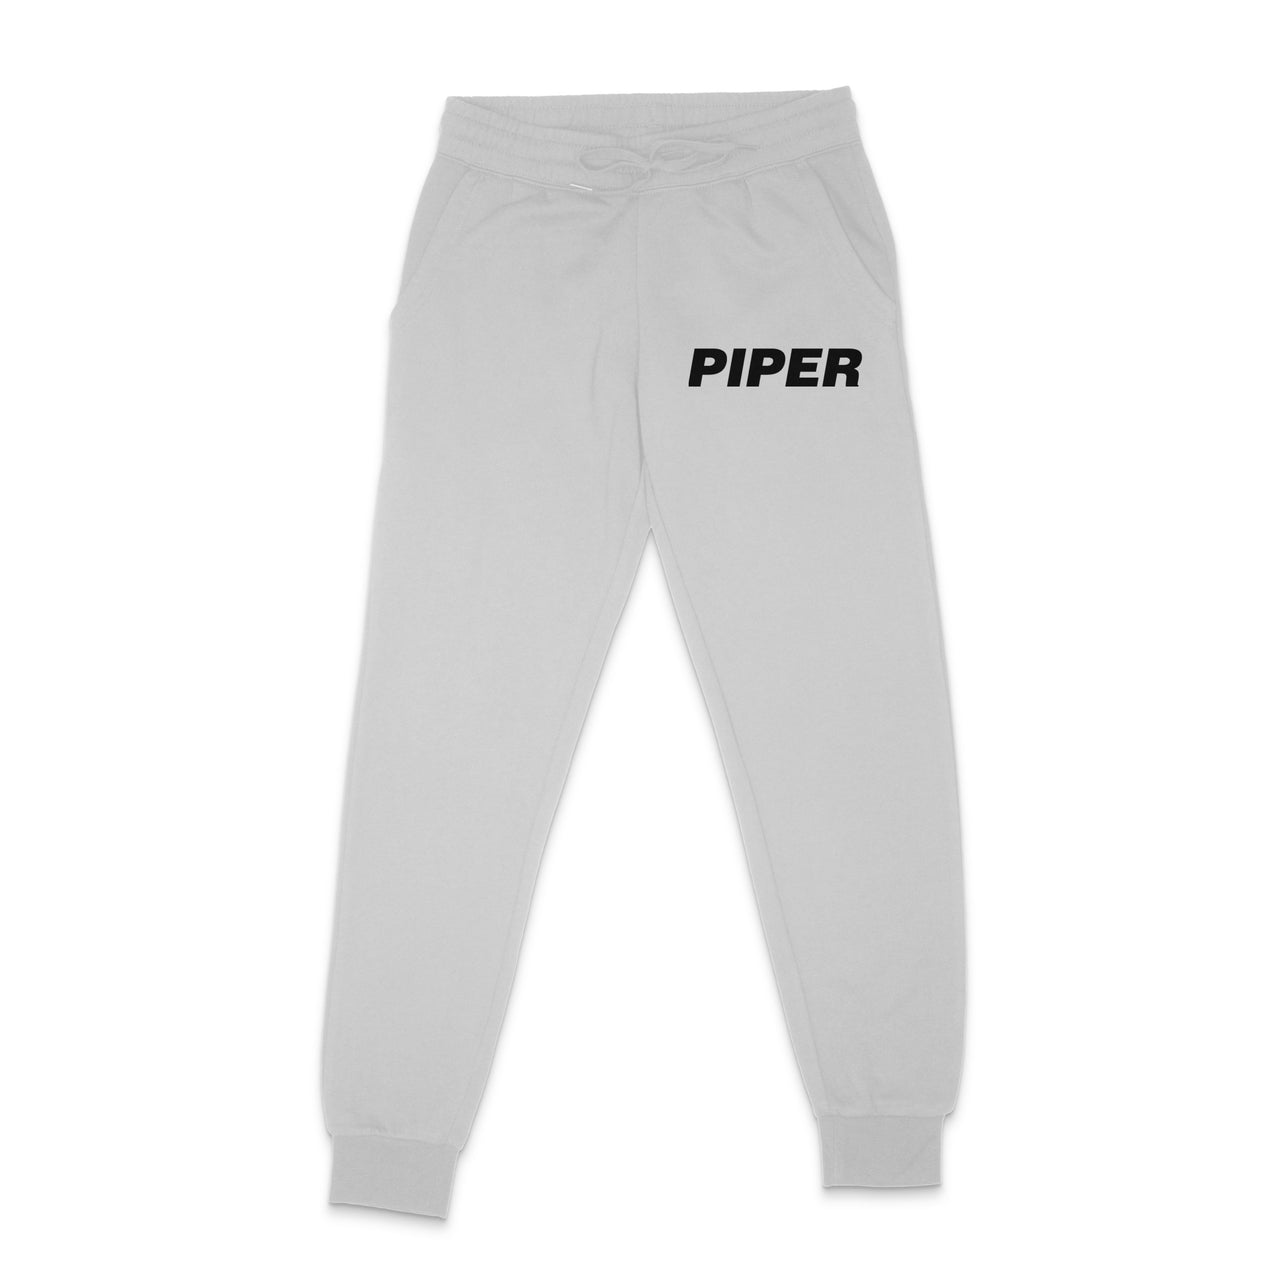 Piper & Text Designed Sweatpants